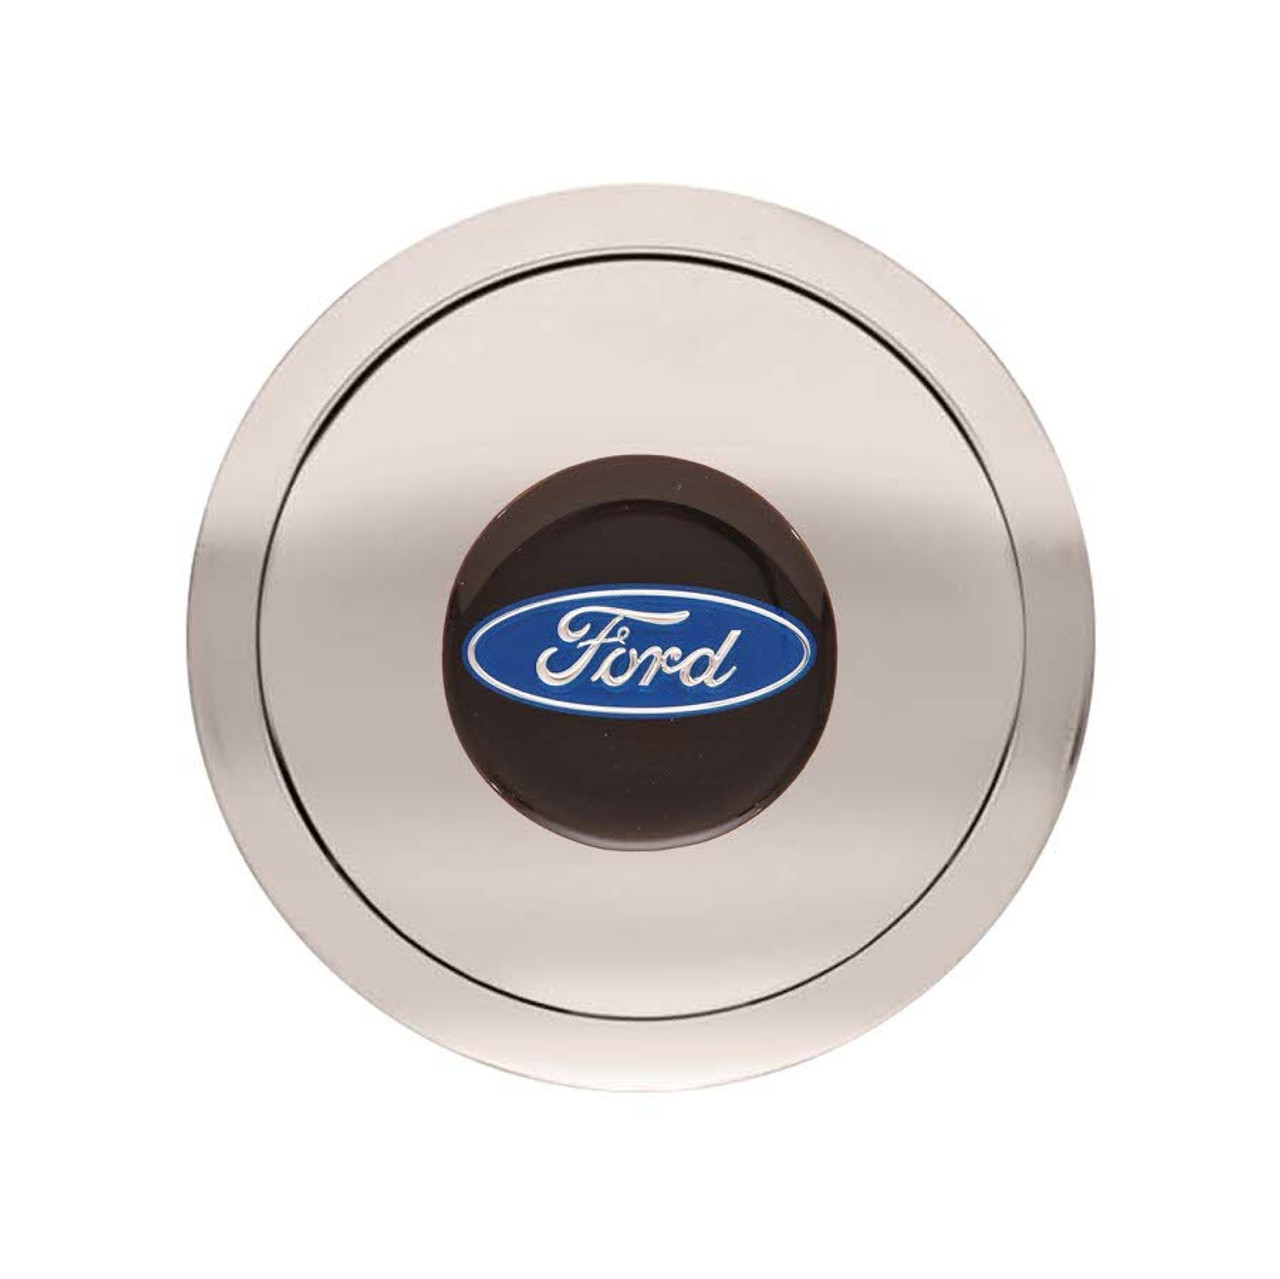 GT9 Horn Button Ford Logo Color Emblem